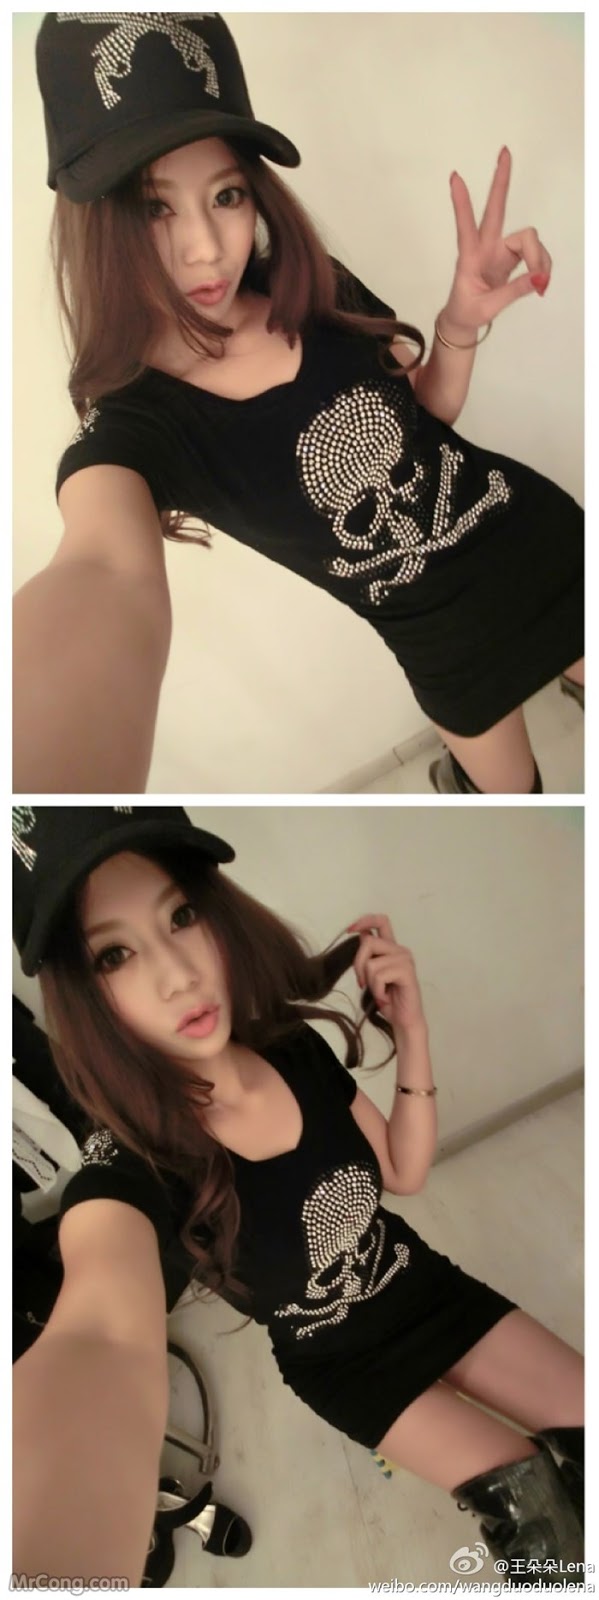 Wang Duo Duo (王 朵朵 Lena) beauty and sexy photos on Weibo (597 photos) photo 13-8